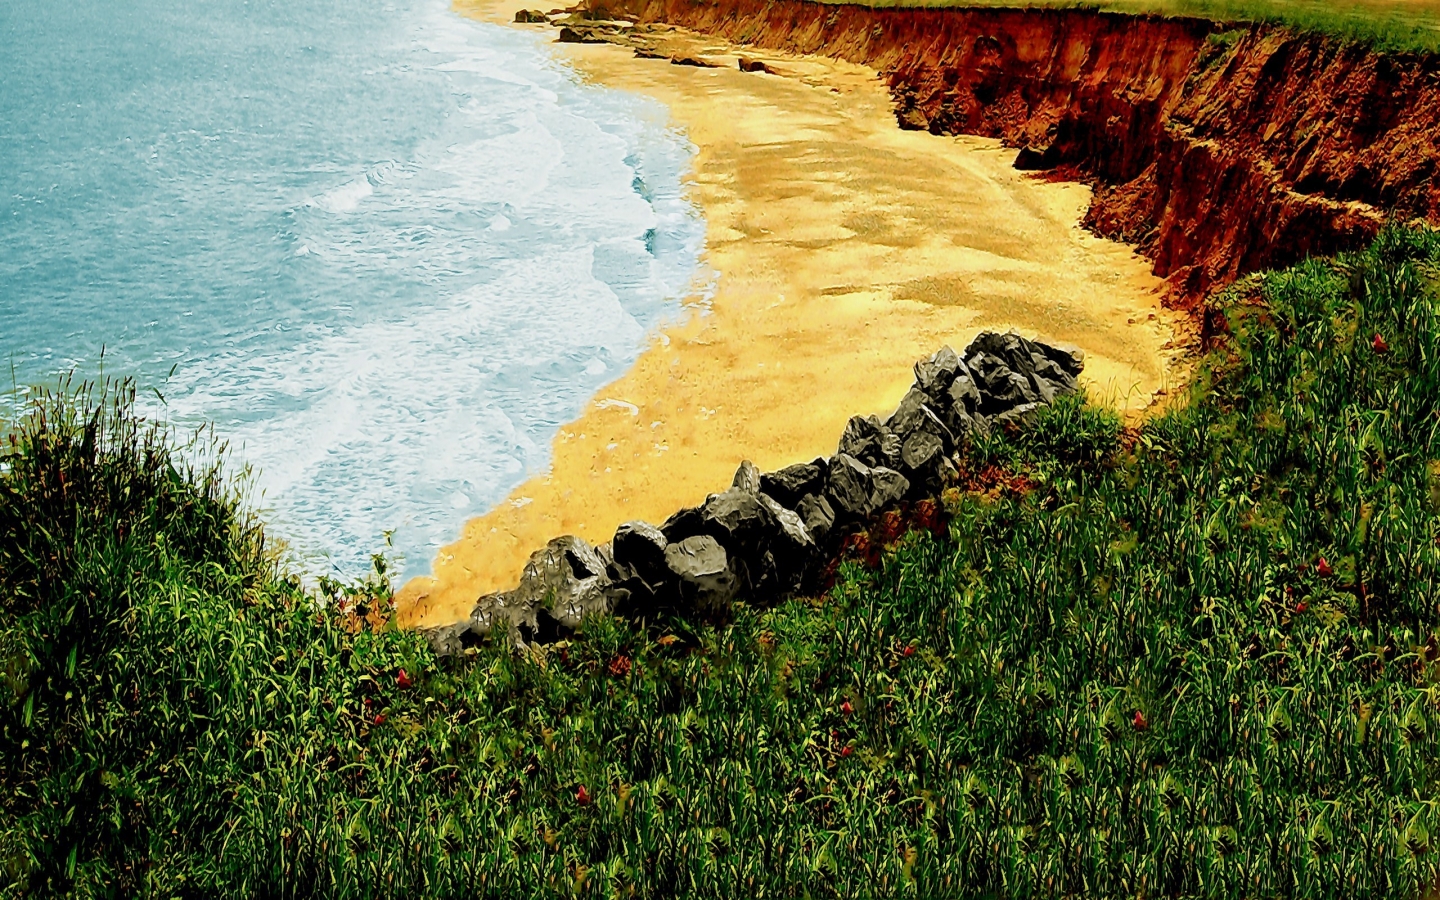 The Dream Beach for 1440 x 900 widescreen resolution